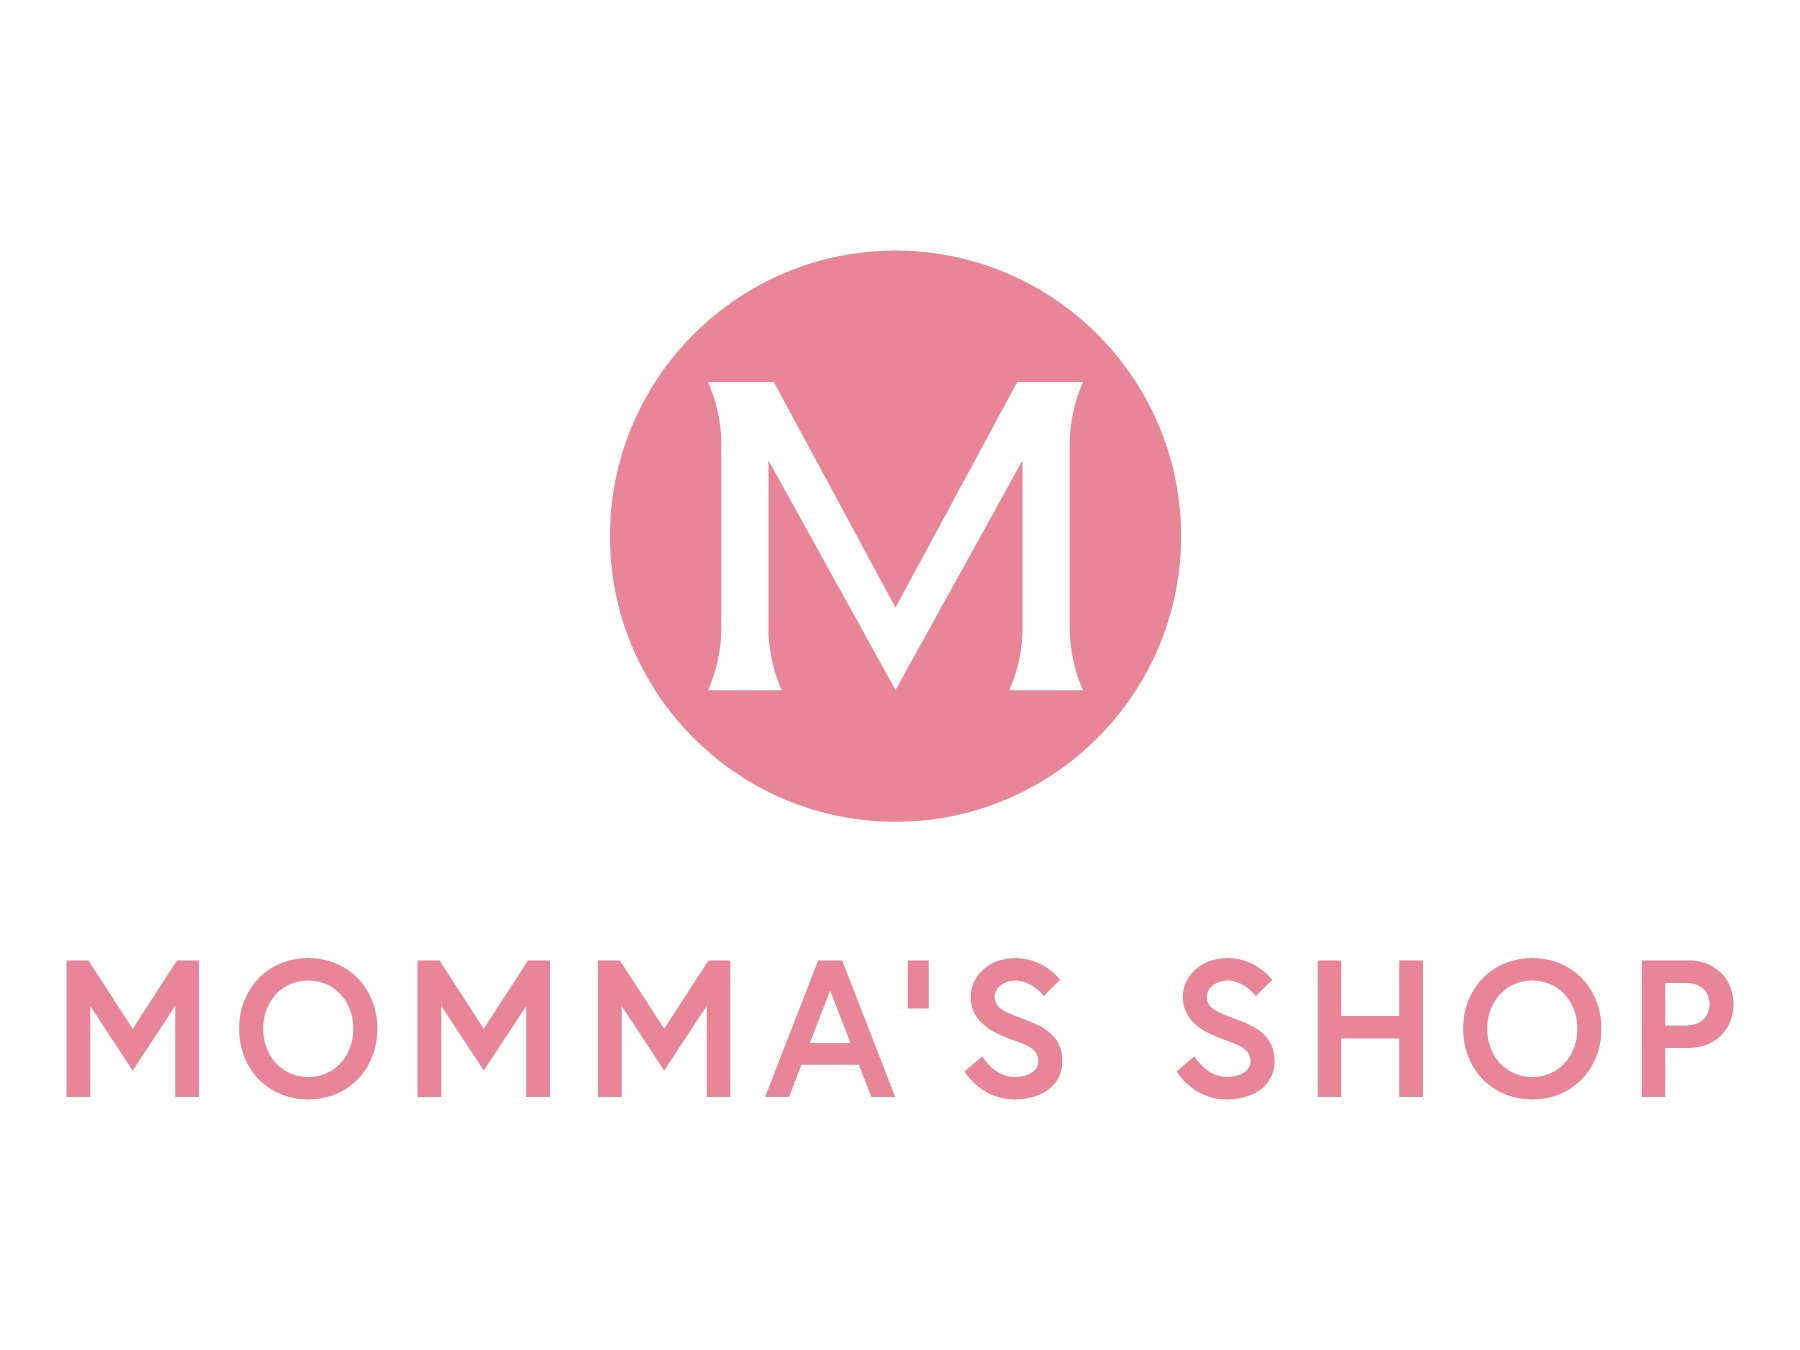 Momma's Shop logo